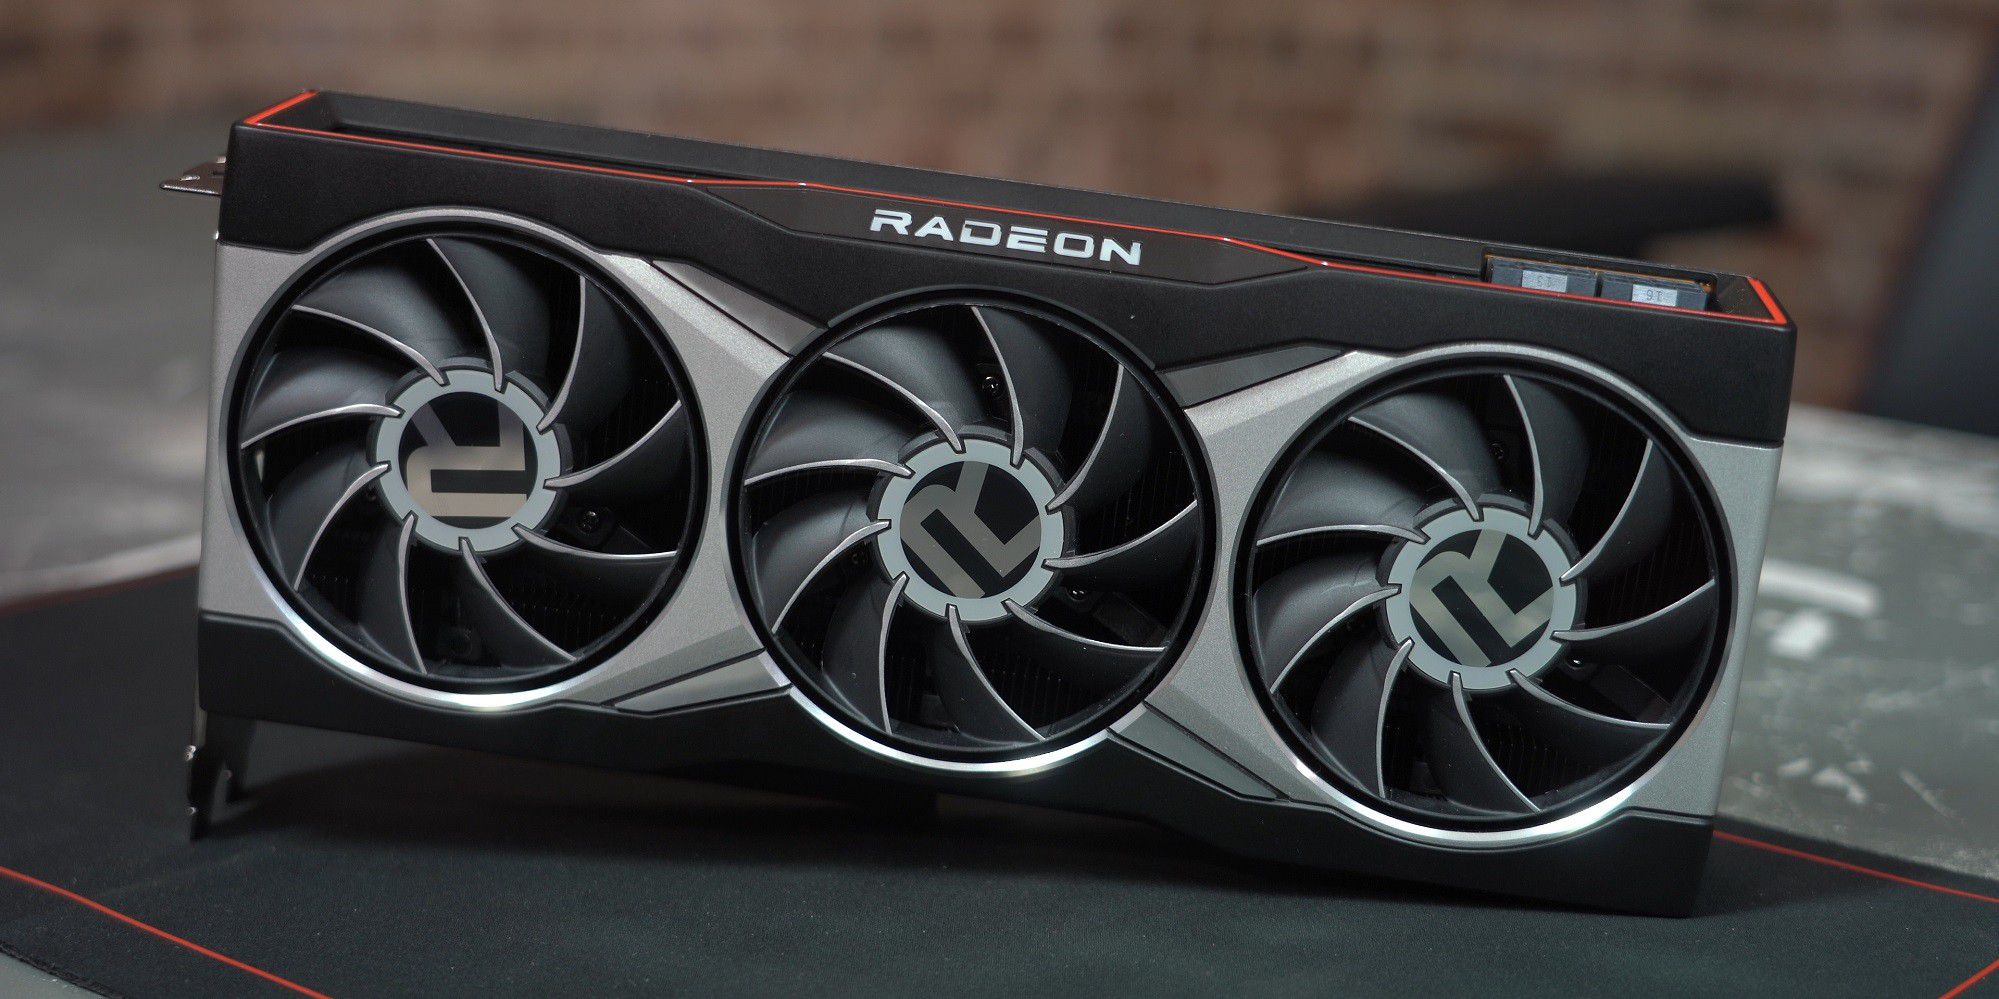 Thử nghiệm: AMD Radeon RX 6900 XT